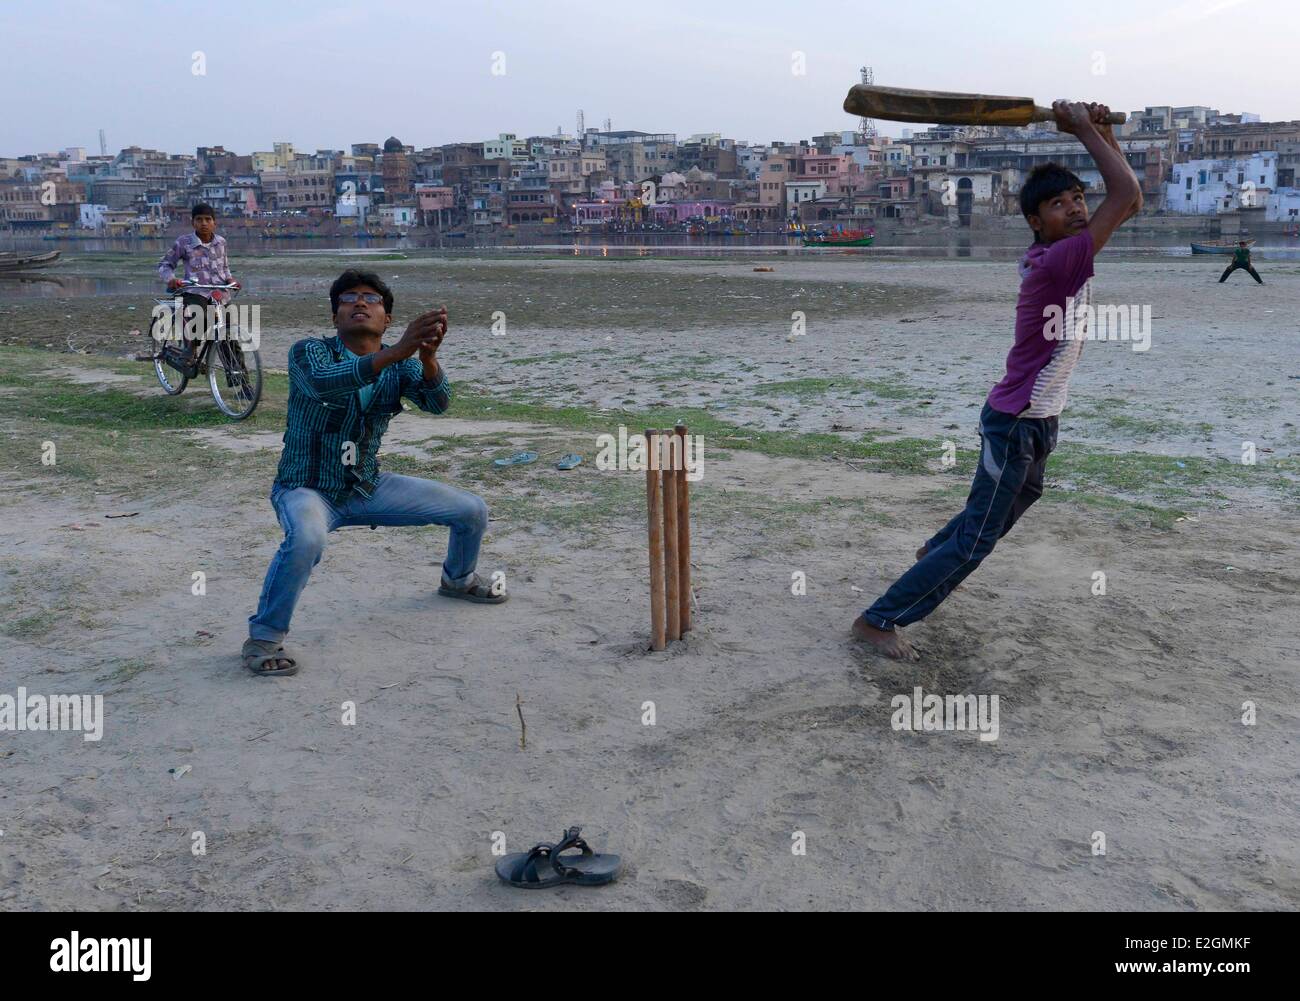 India Uttar Pradesh State Mathura children play cricket along river during Holi festival celebrations Stock Photo